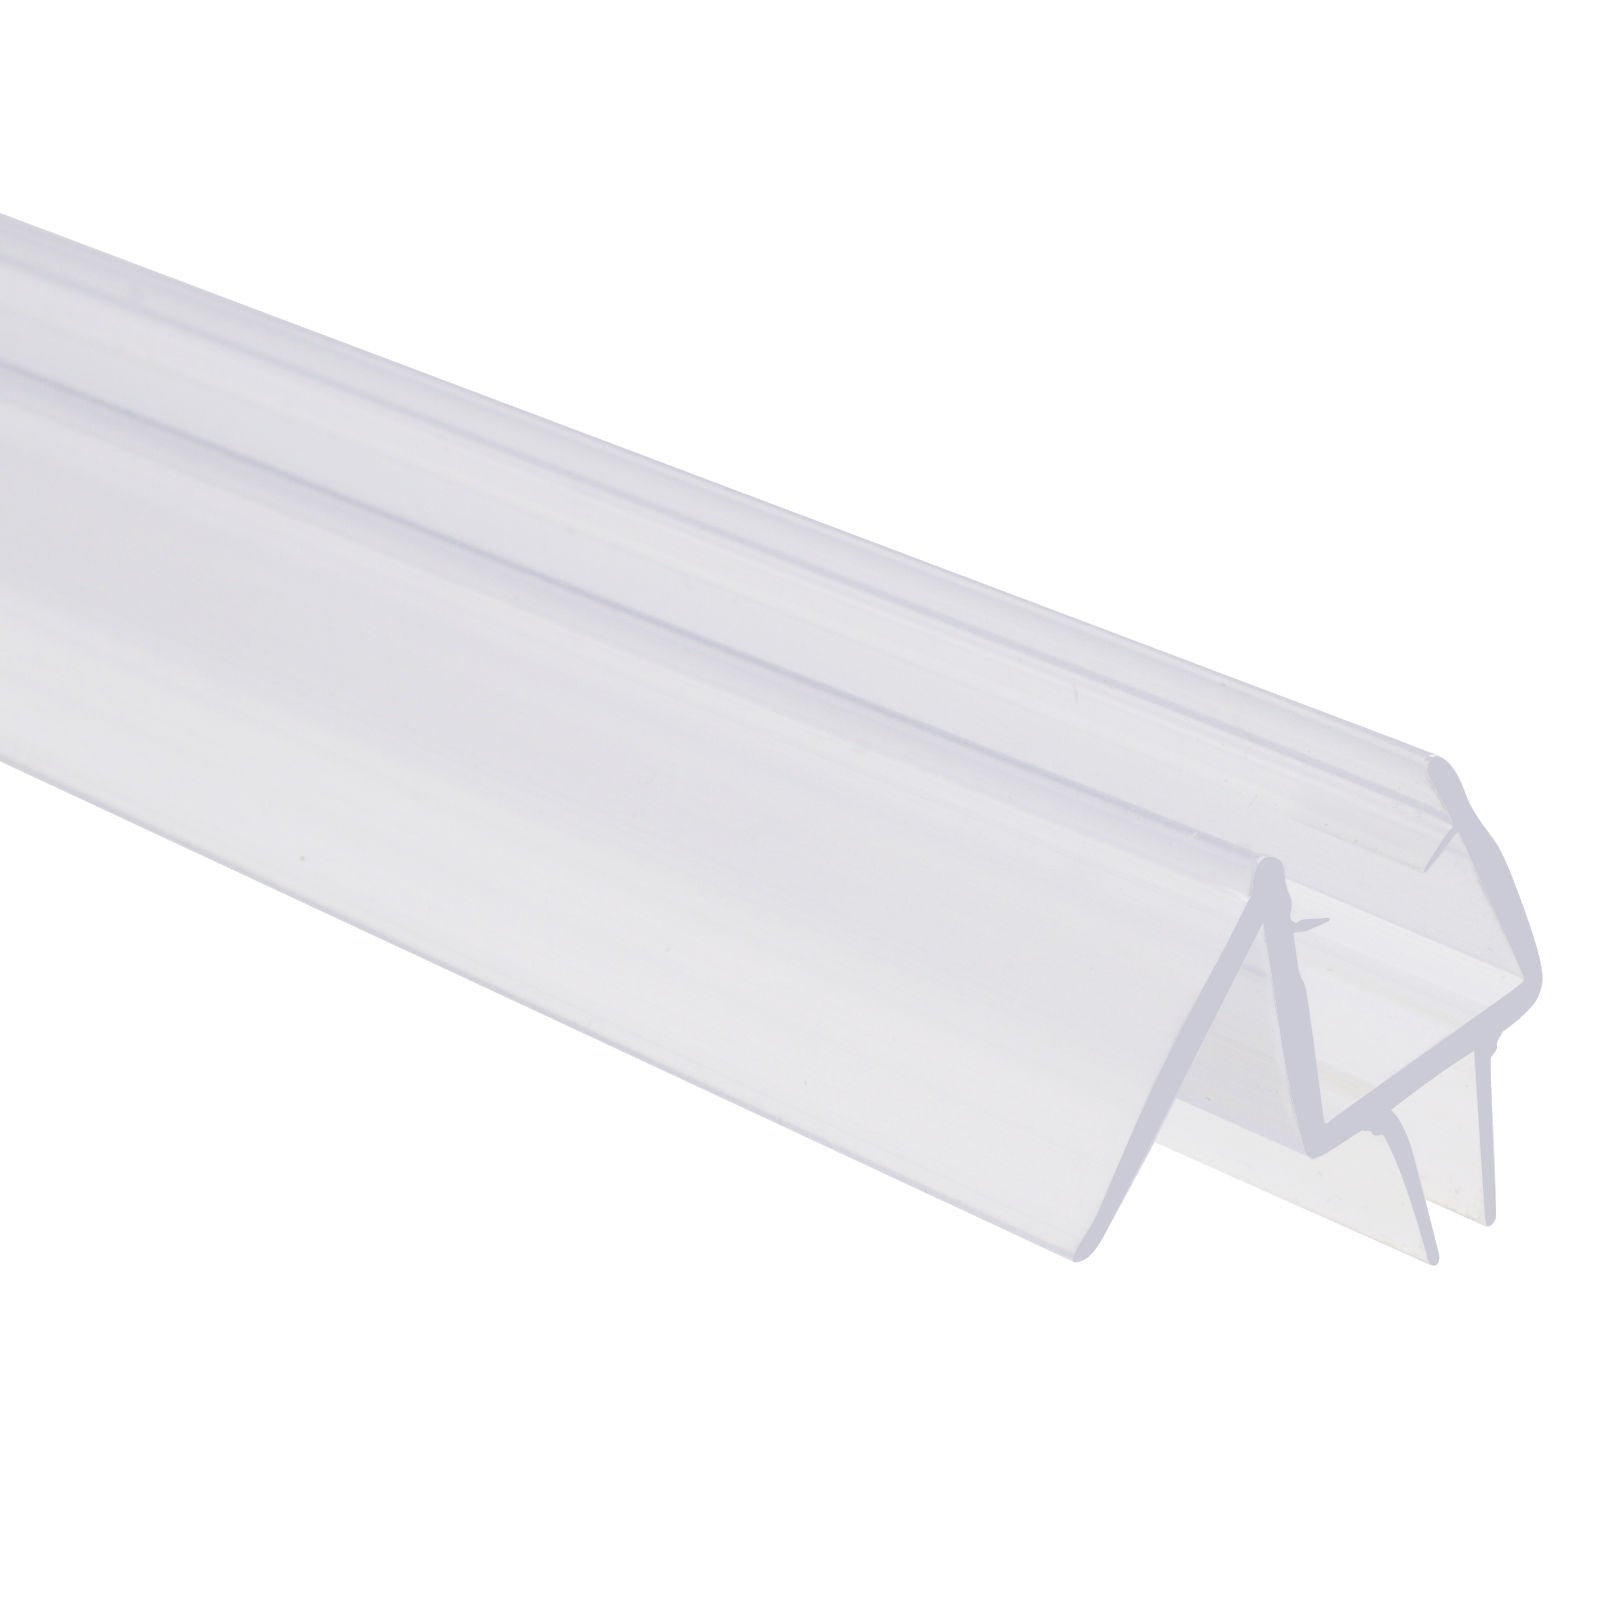 SL4U Frameless Glass Shower Doors Bottom Seal Sweep Seal For 3/8'' Glass Door.